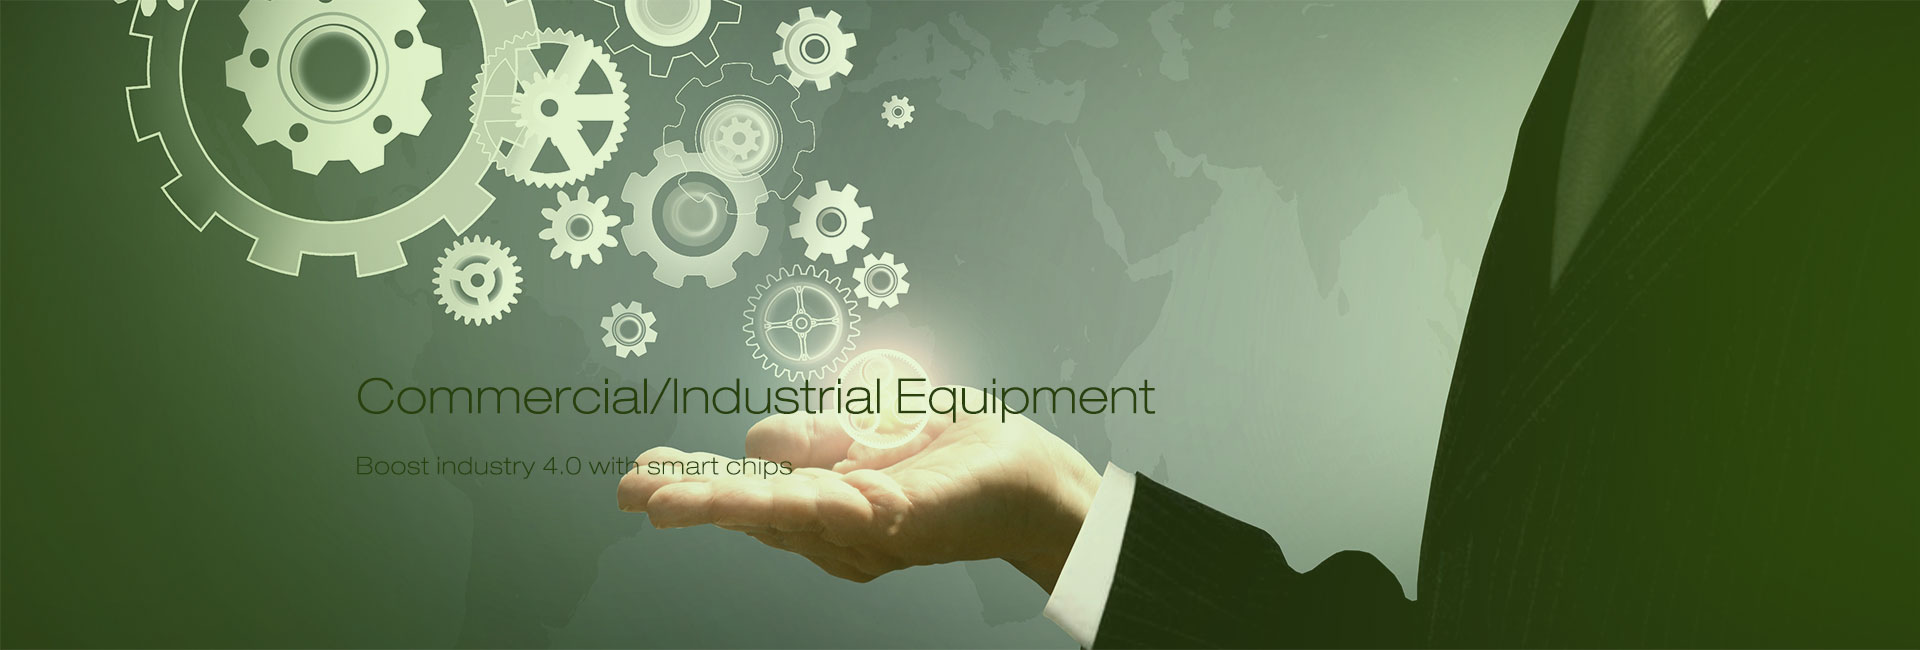 Industrial Control Equipment